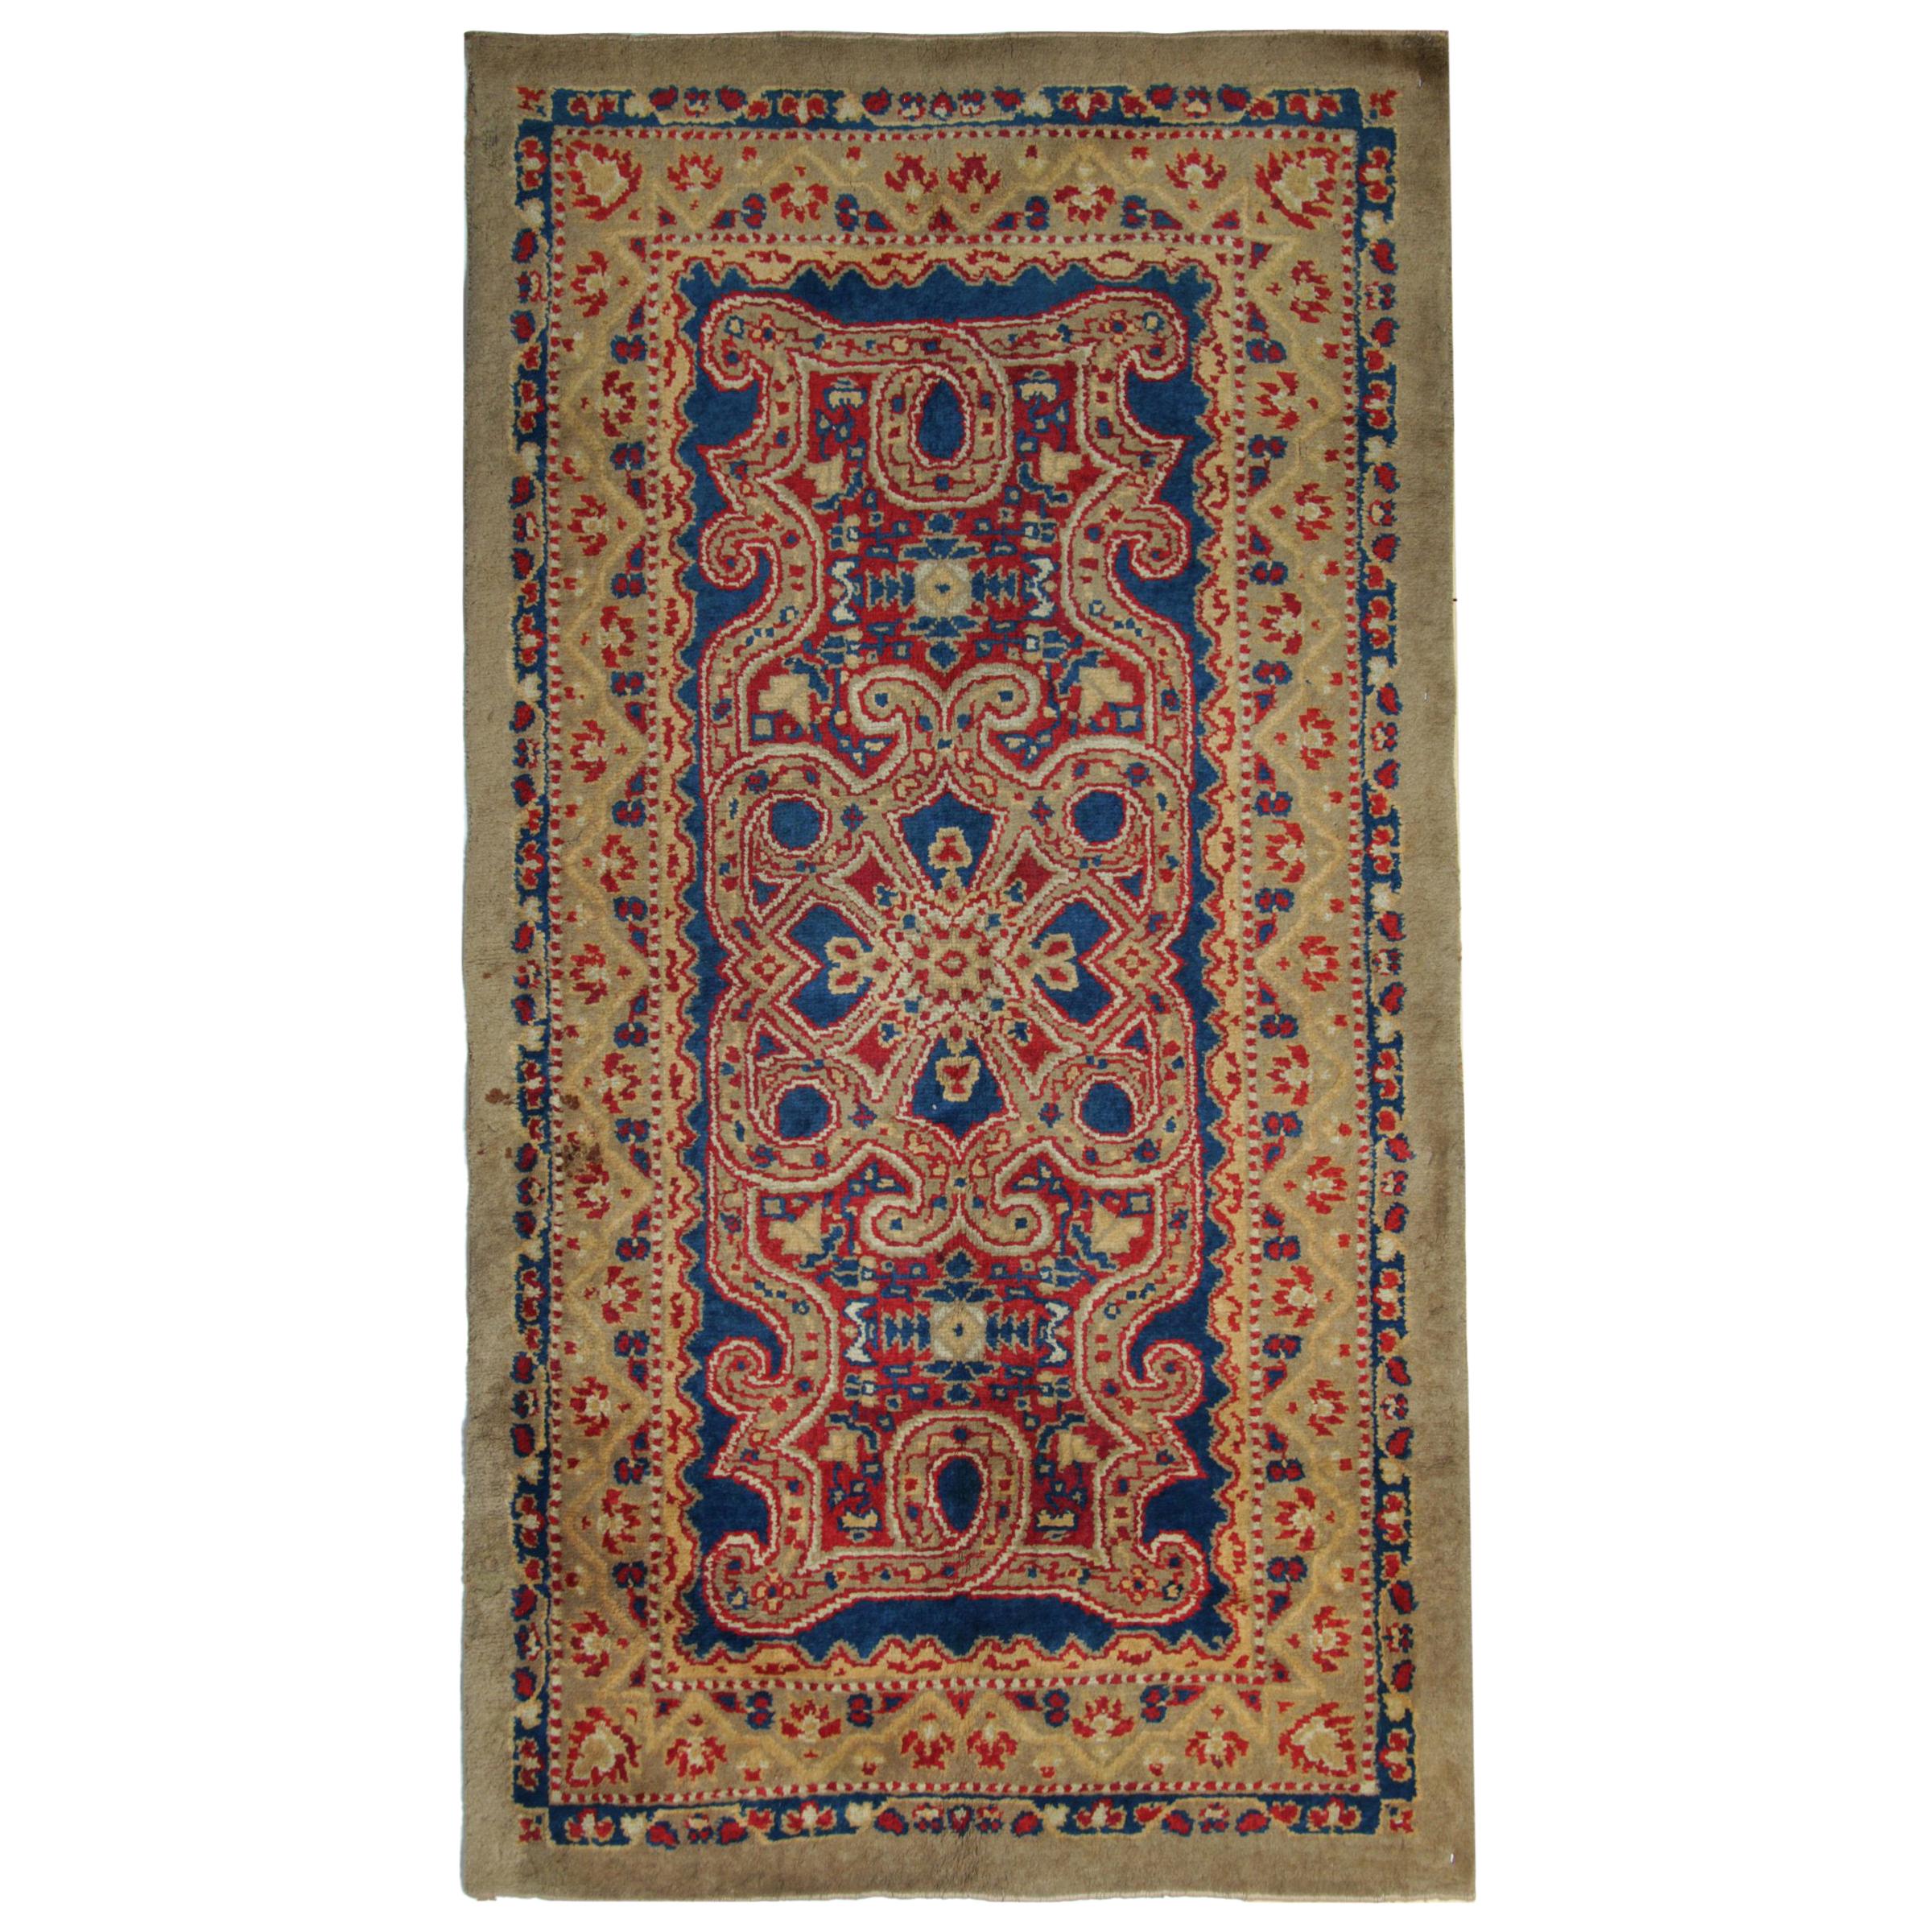 Handmade Carpet Rugs, Exceptional Antique British Axminster, Art Deco Rugs